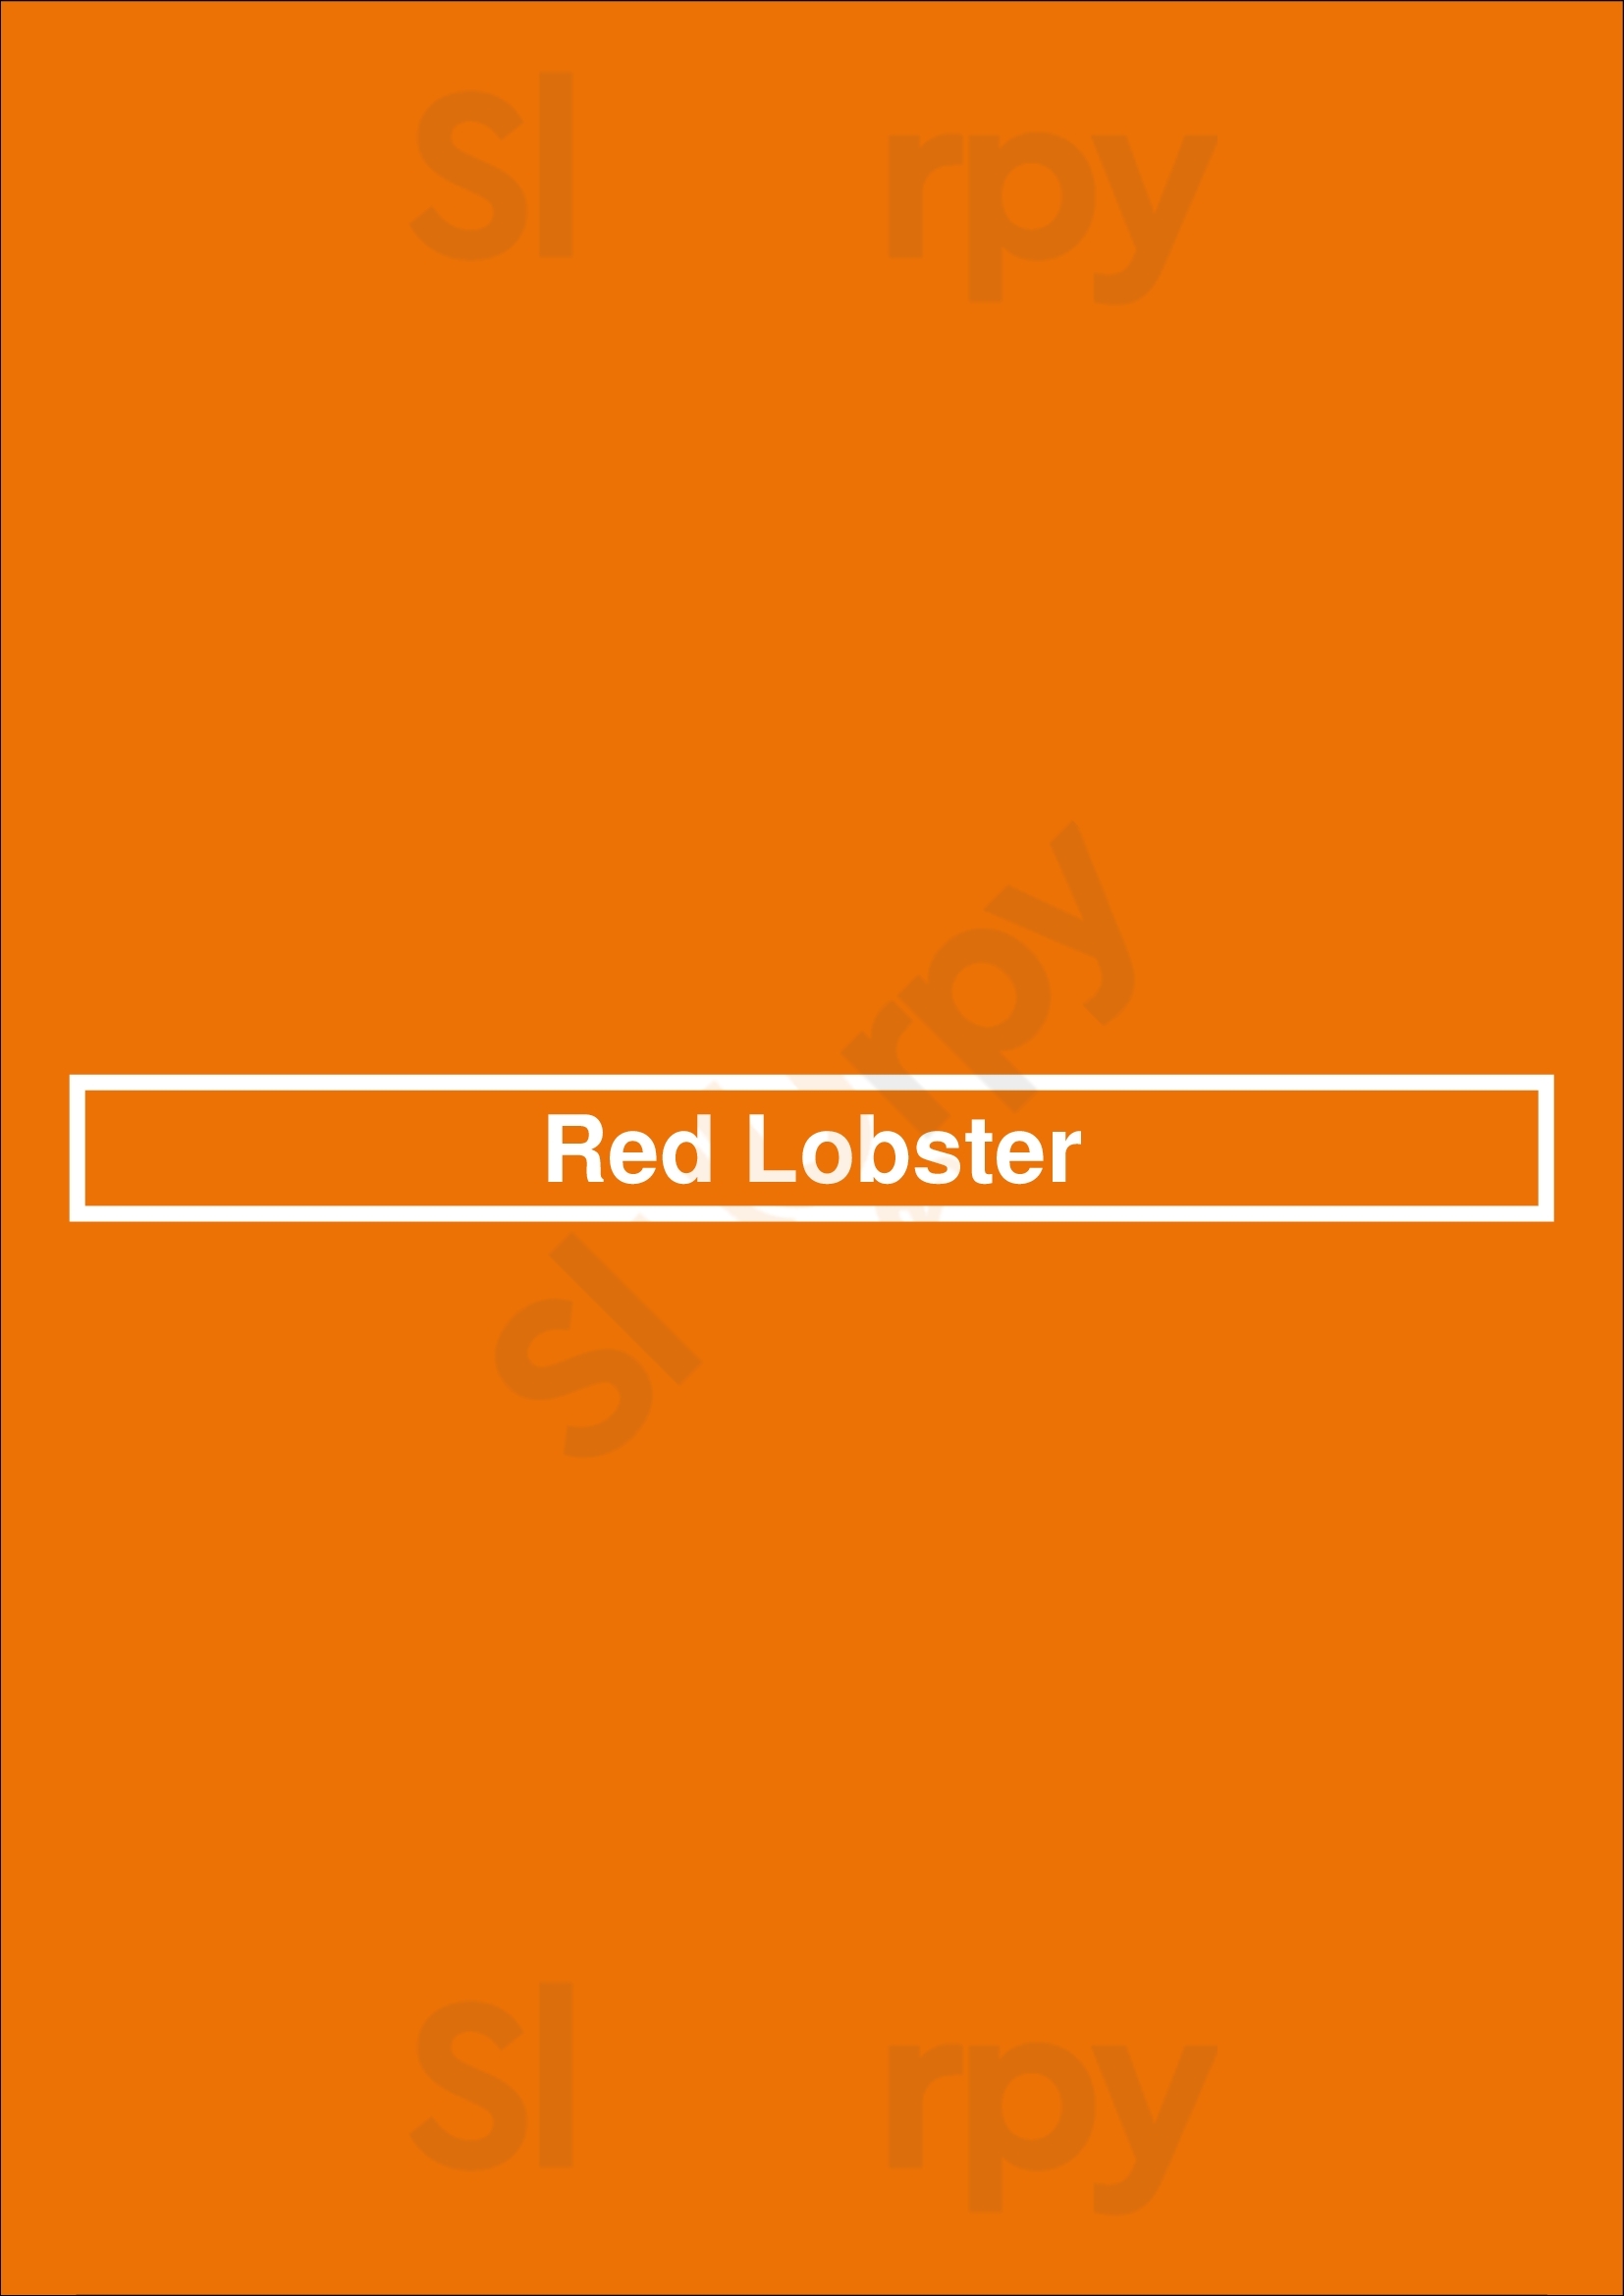 Red Lobster Tampa Menu - 1